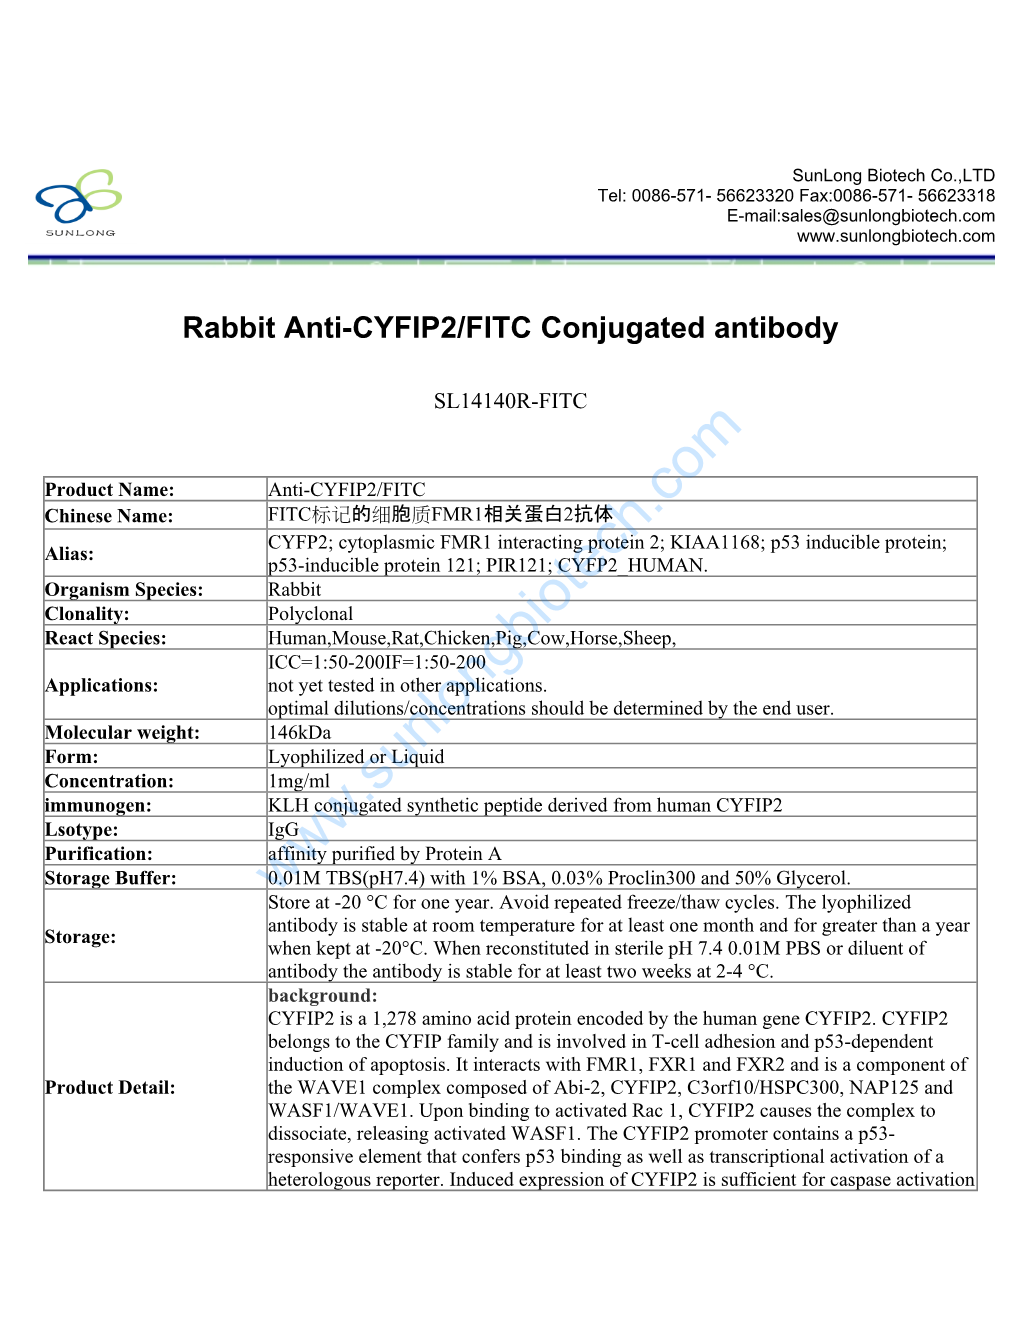 Rabbit Anti-CYFIP2/FITC Conjugated Antibody-SL14140R-FITC